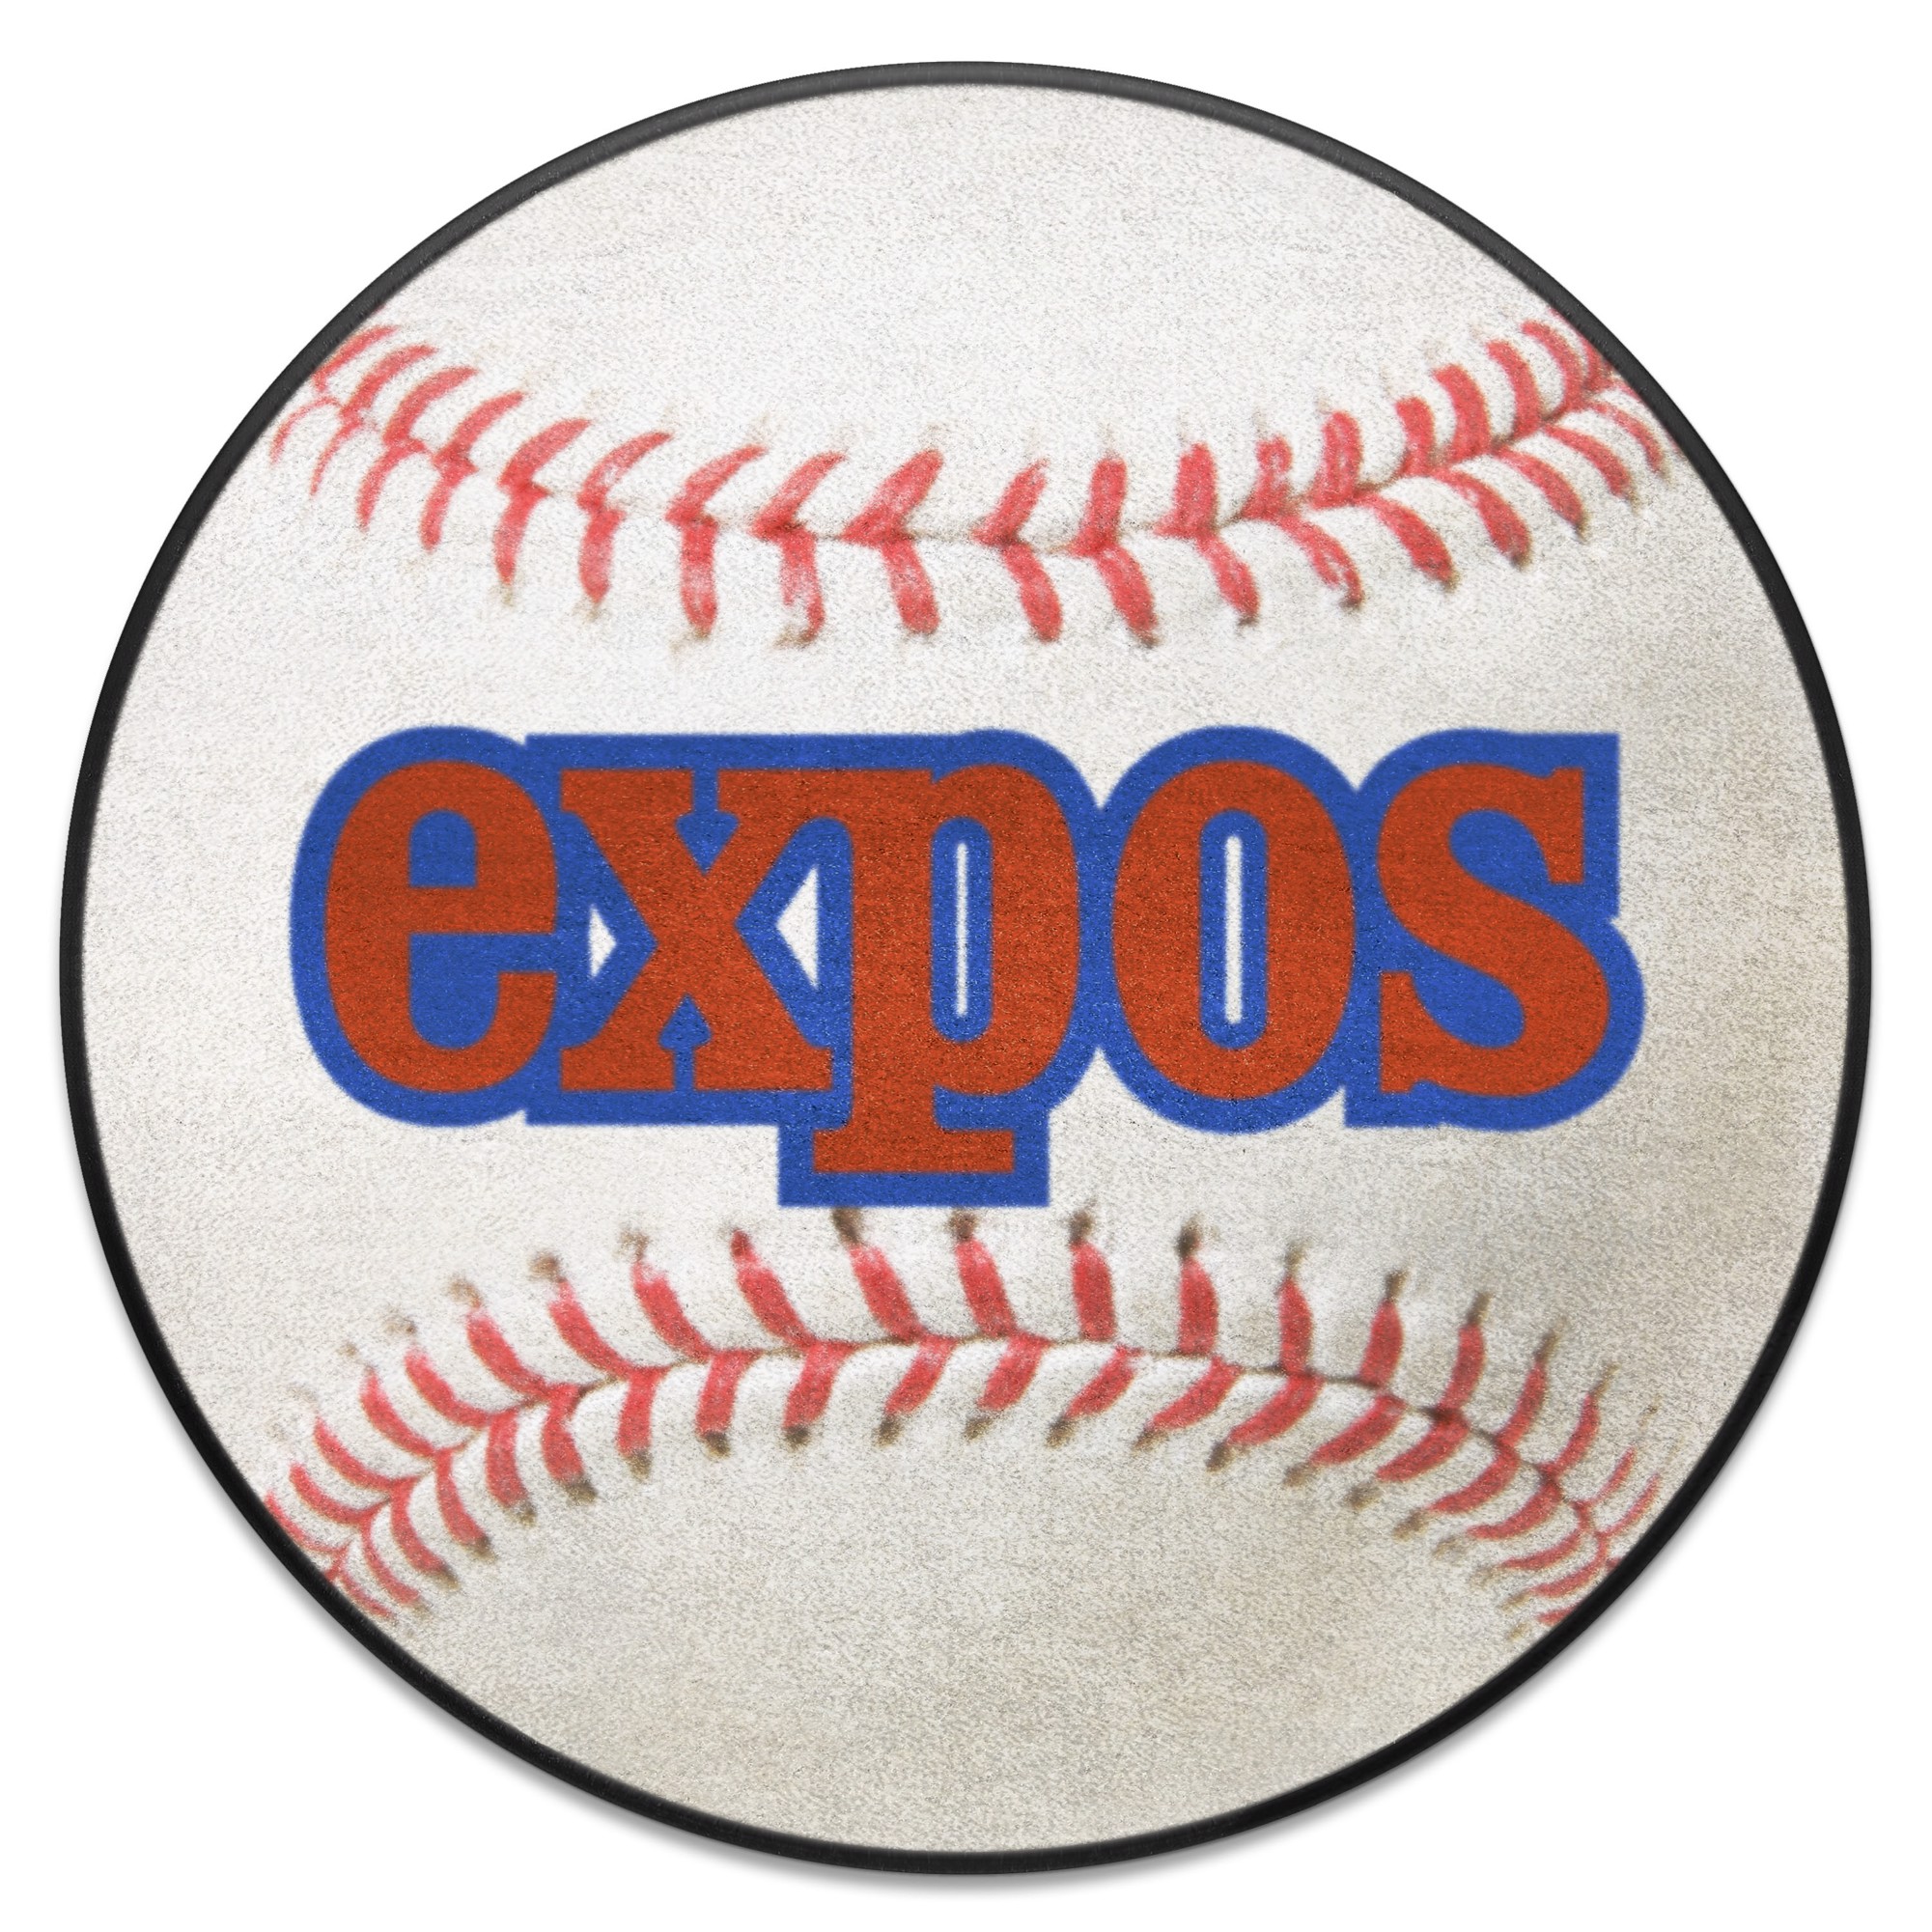 FANMATS MLB - Chicago White Sox 27 Diameter Baseball Mat Accent